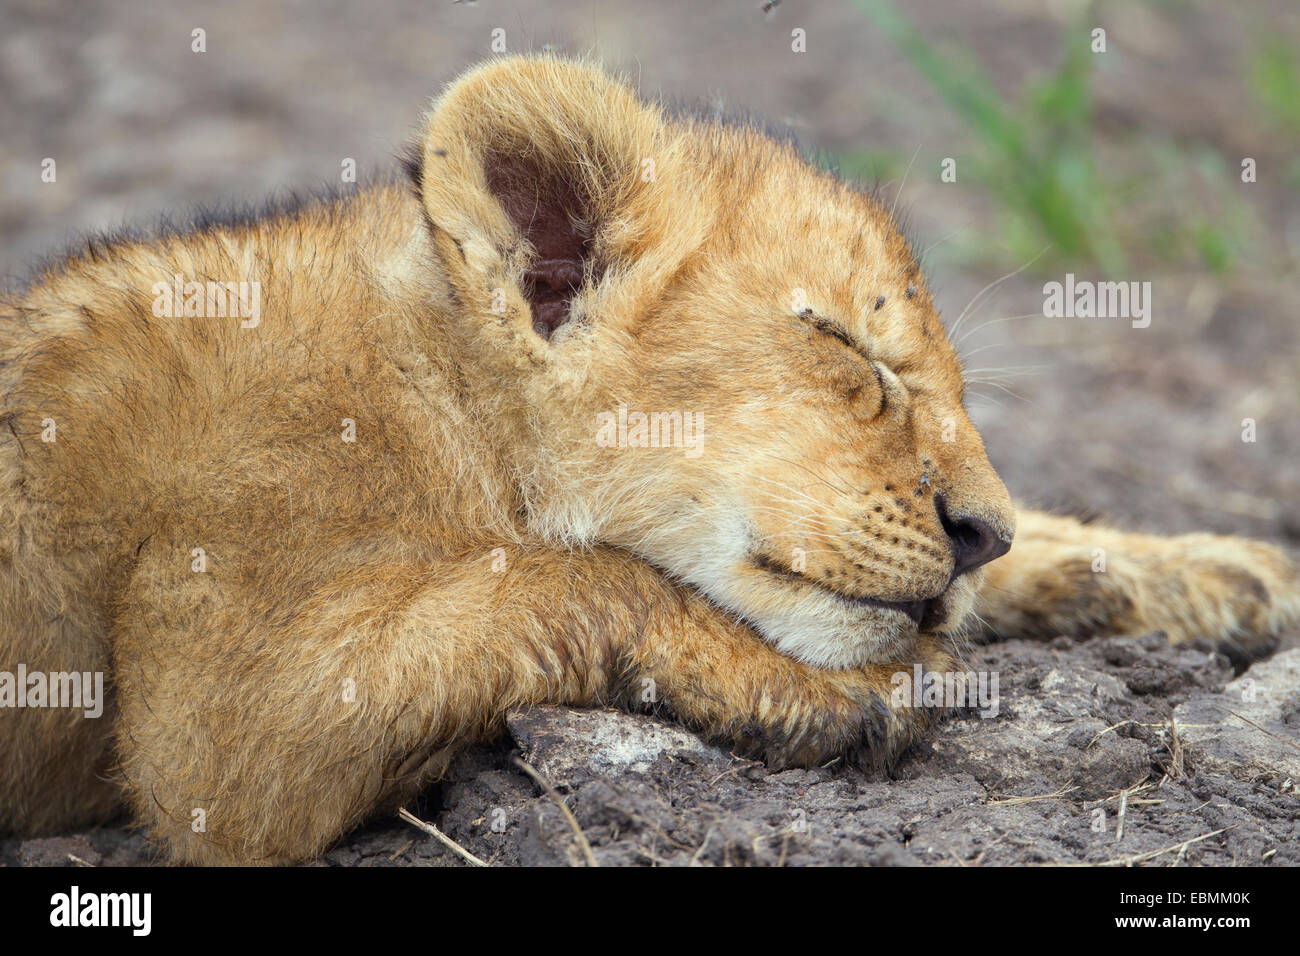 Lion (Panthera leo) cub, dormir, Massai Mara, Serengeti, province de la vallée du Rift, au Kenya Banque D'Images